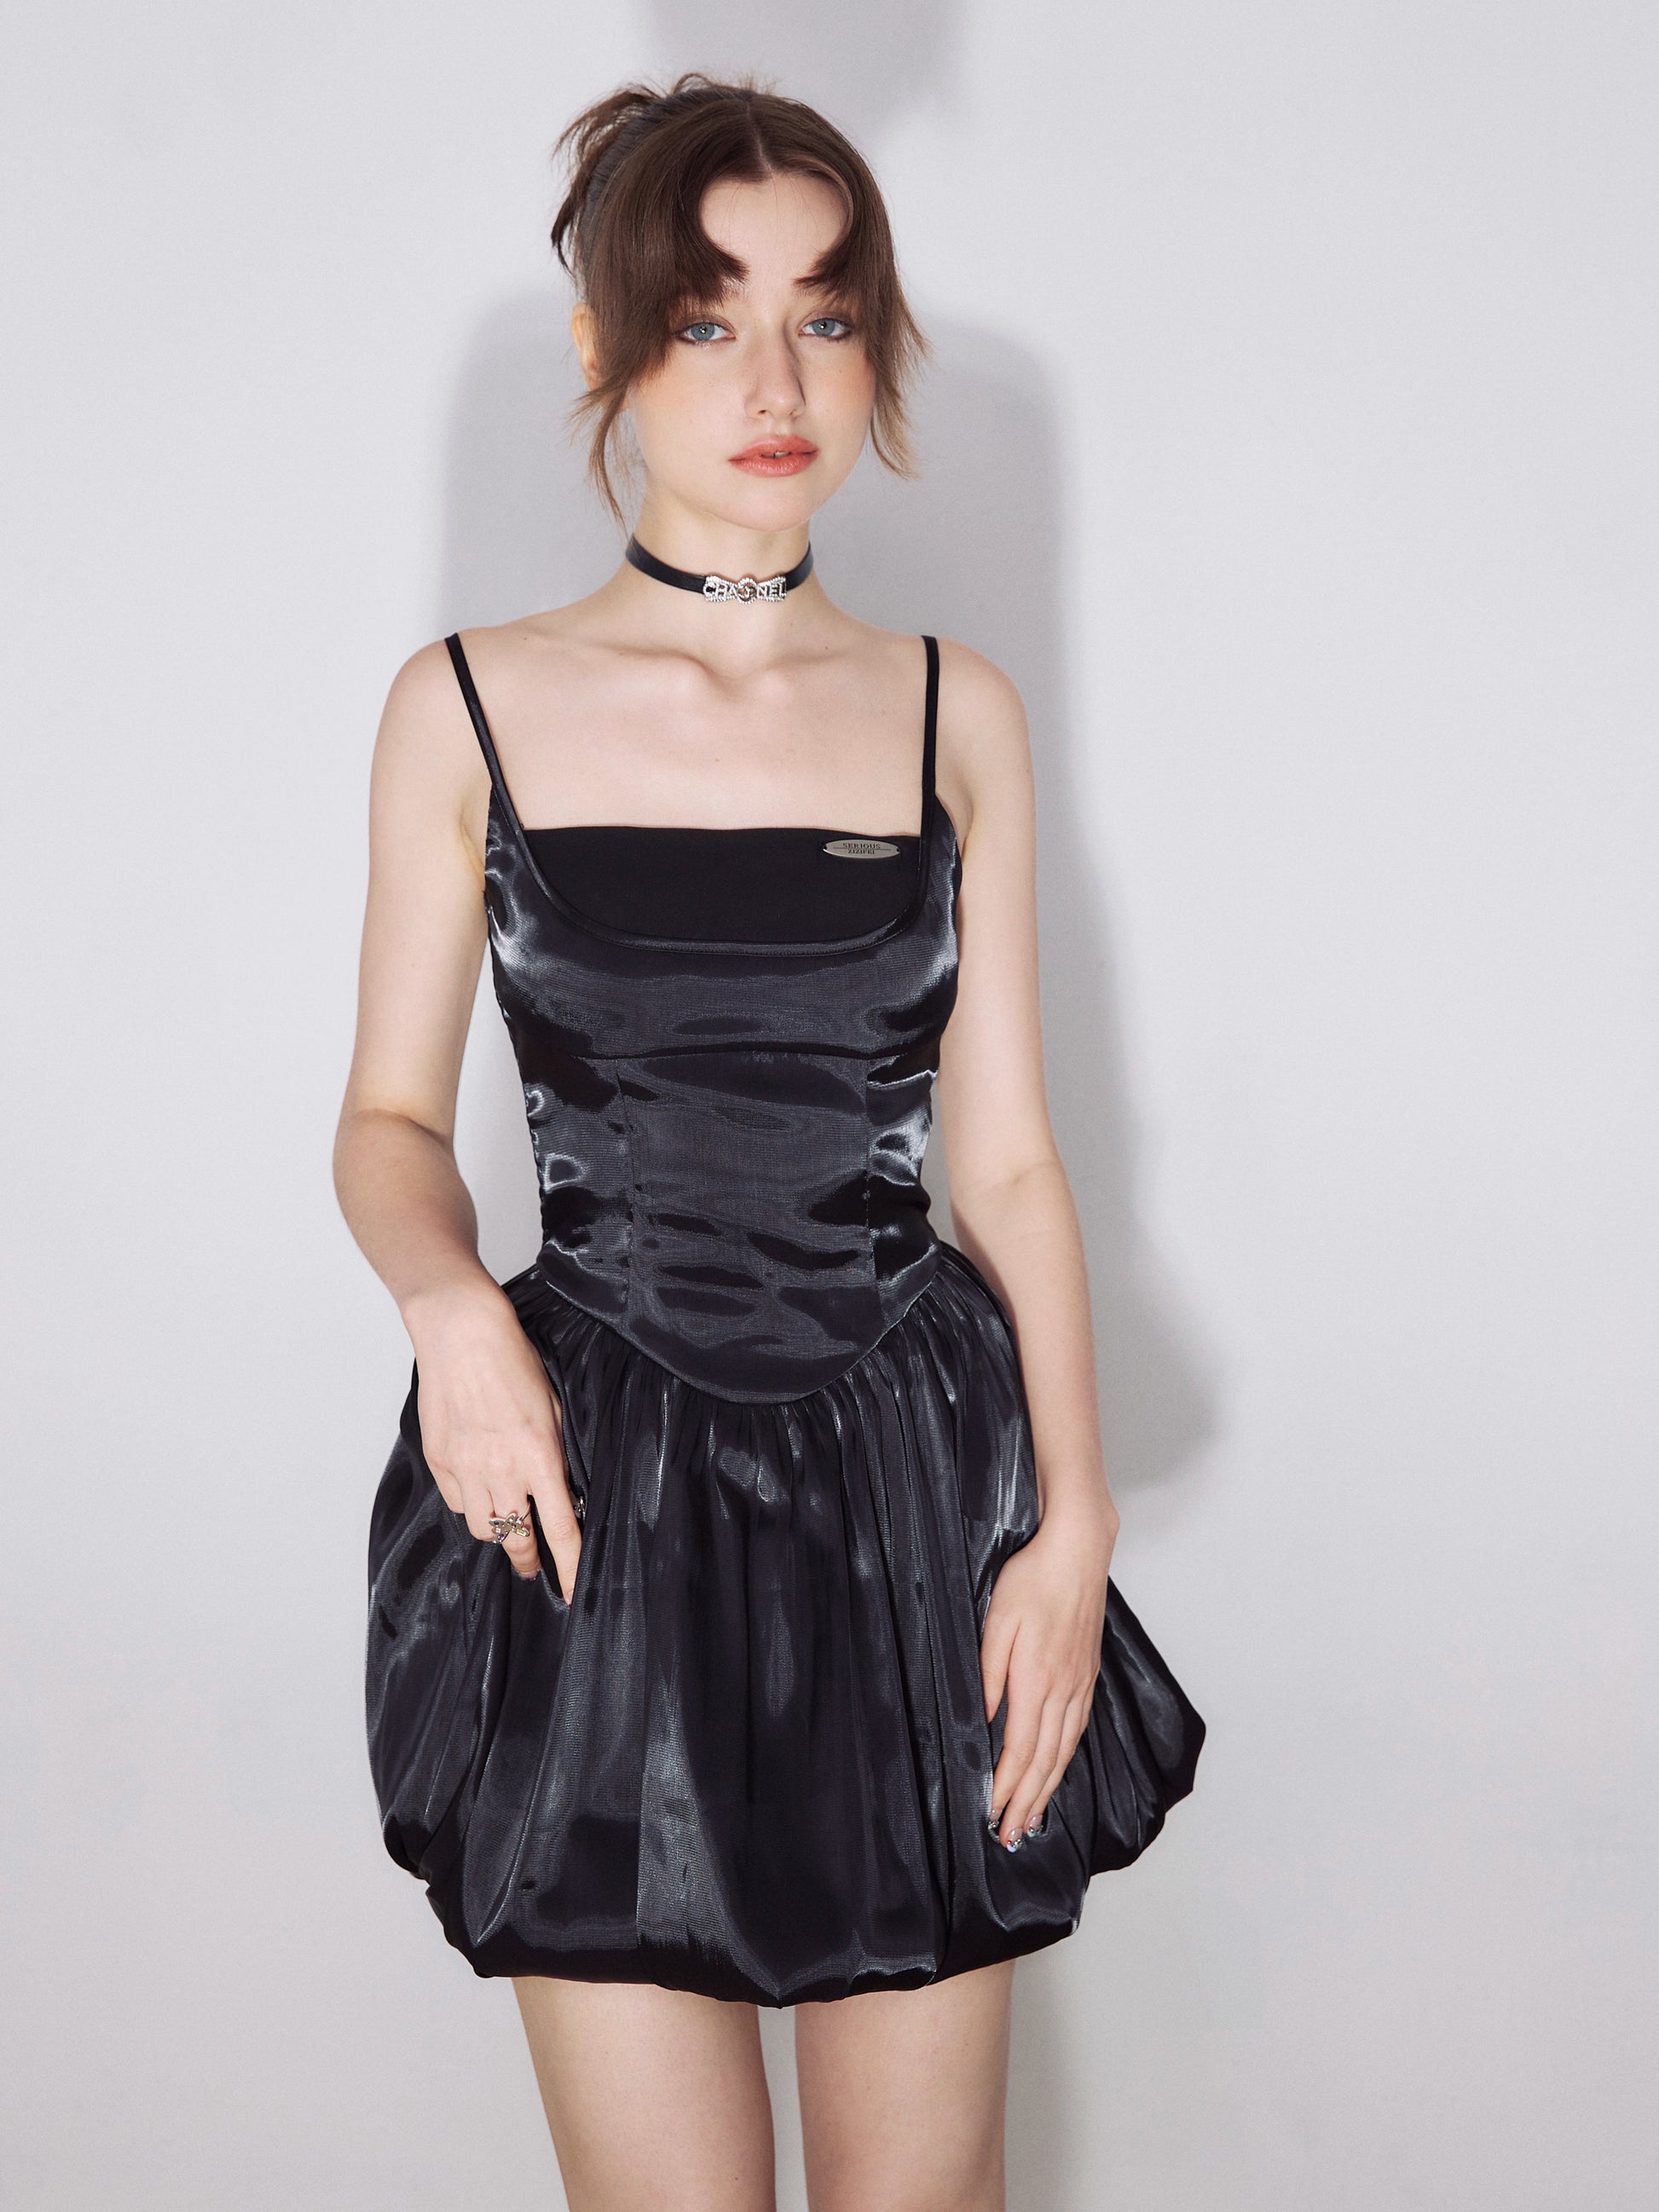 High-End Slim Waist Black Strap Princess Dress